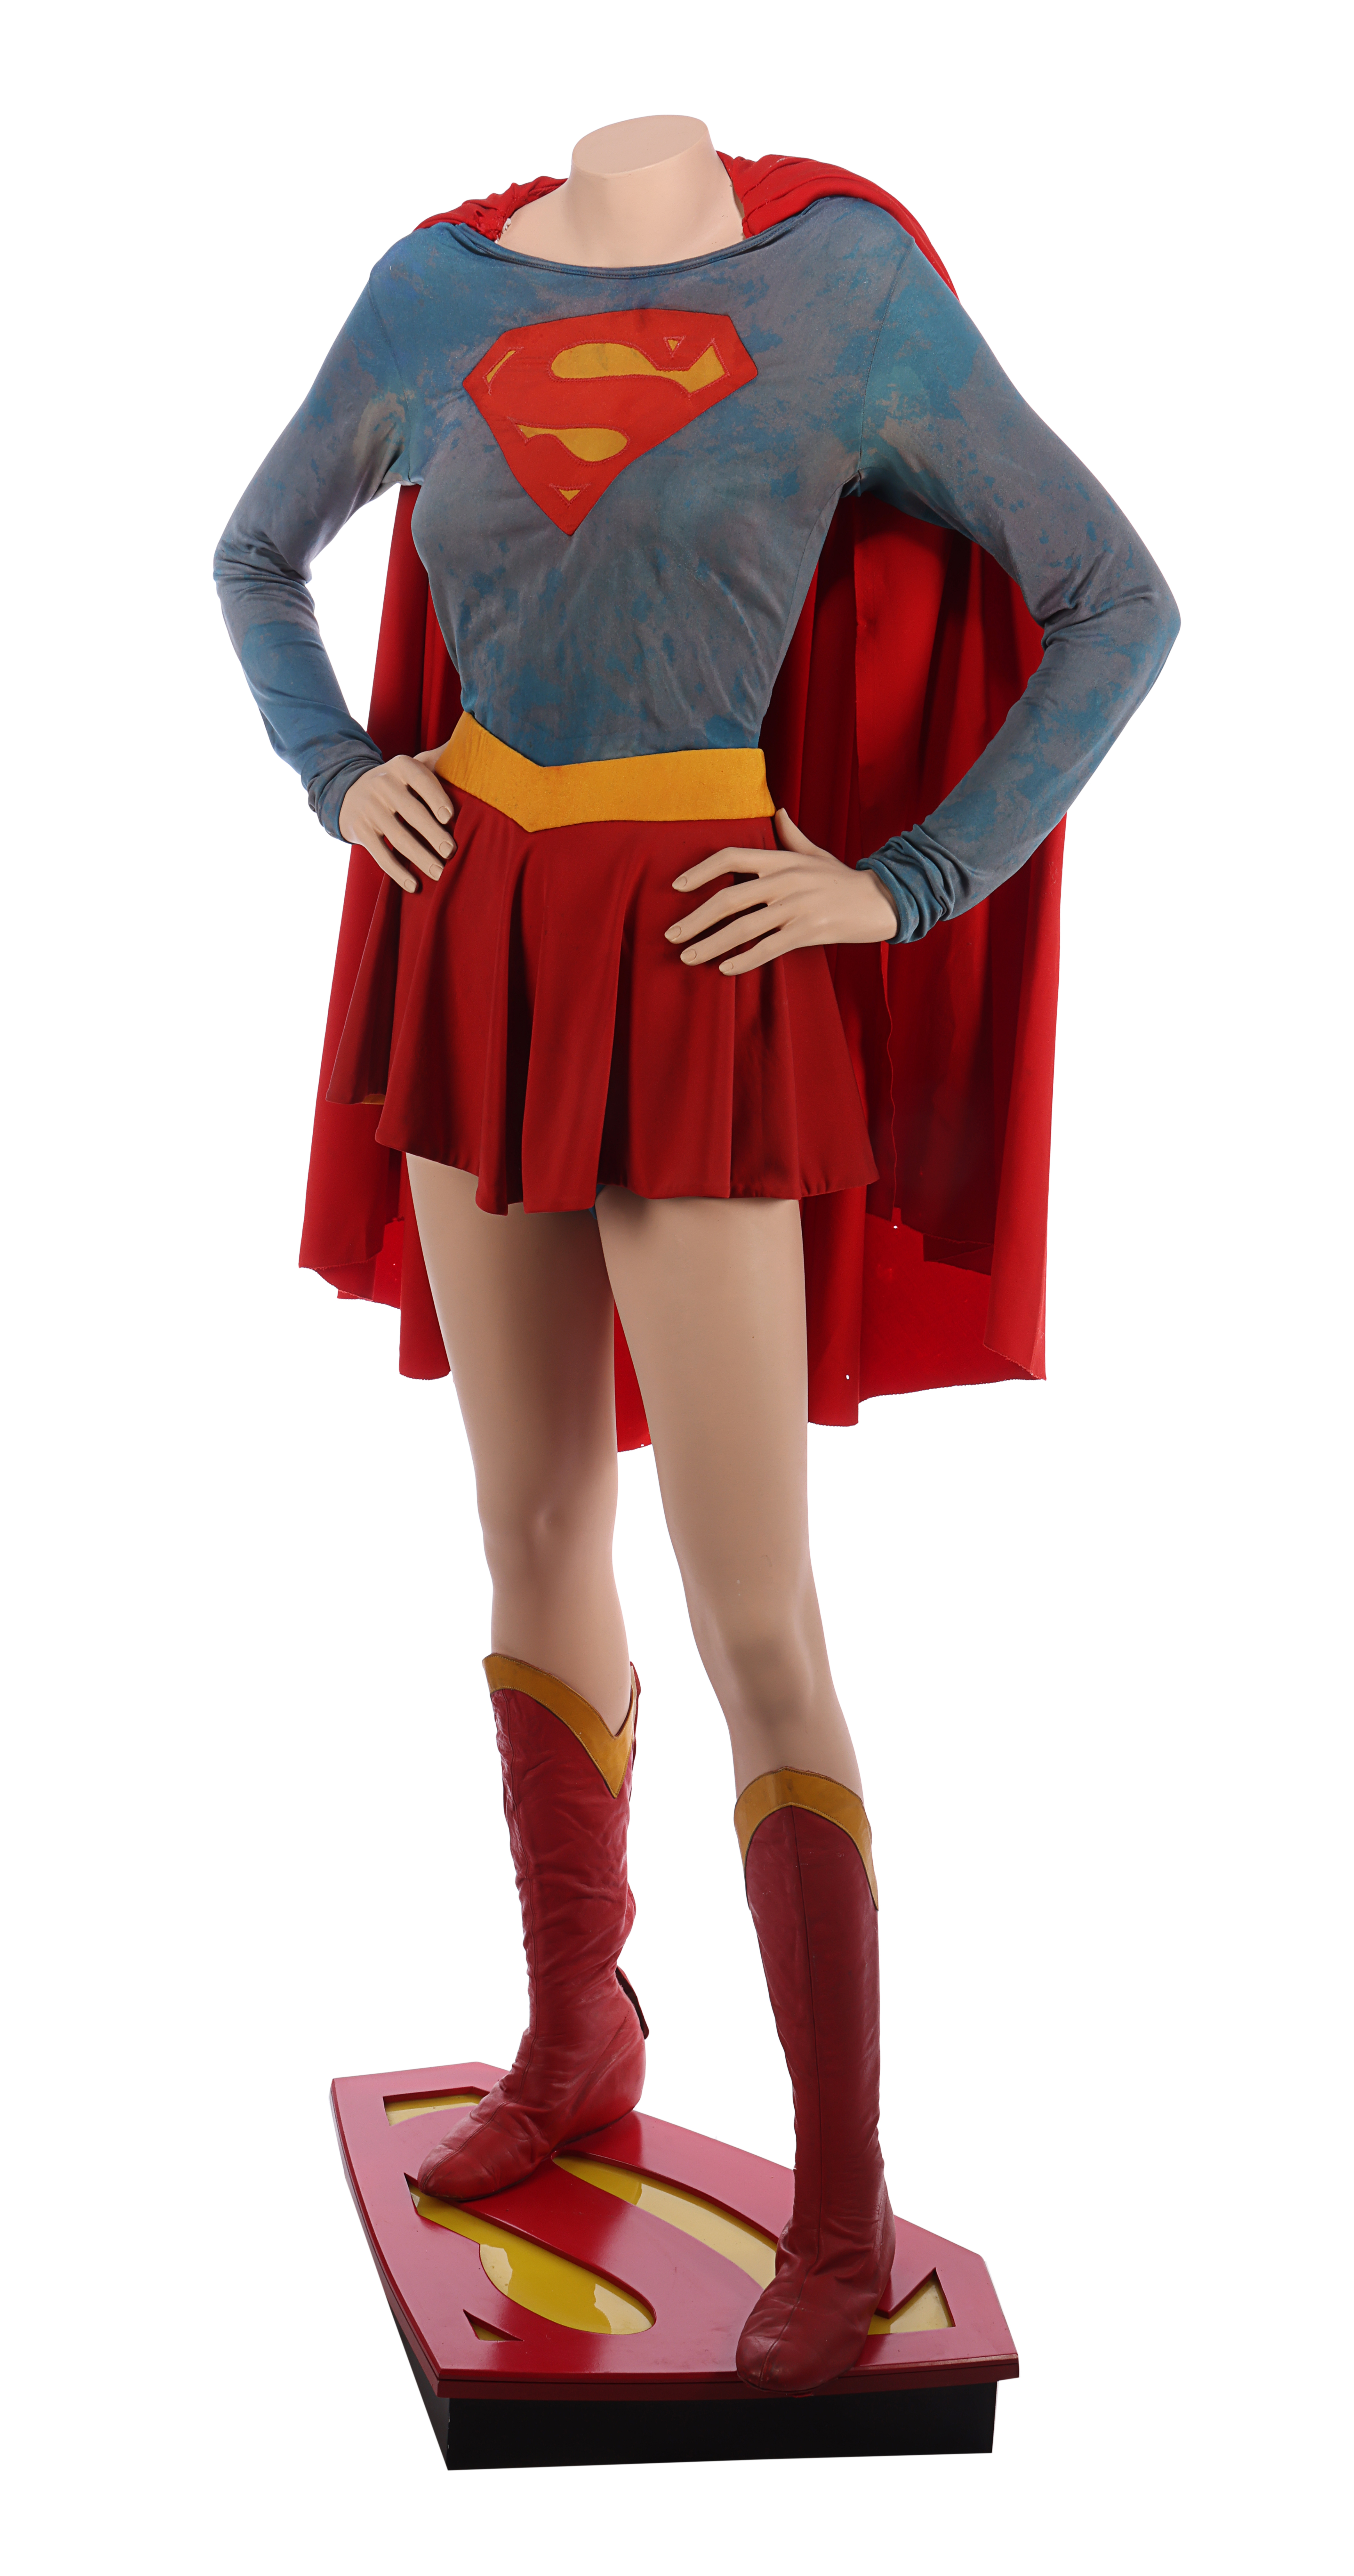 https://www.fortalezadelasoledad.com/imagenes/2022/10/13/helen_slater_supergirl_flying_costume.jpg